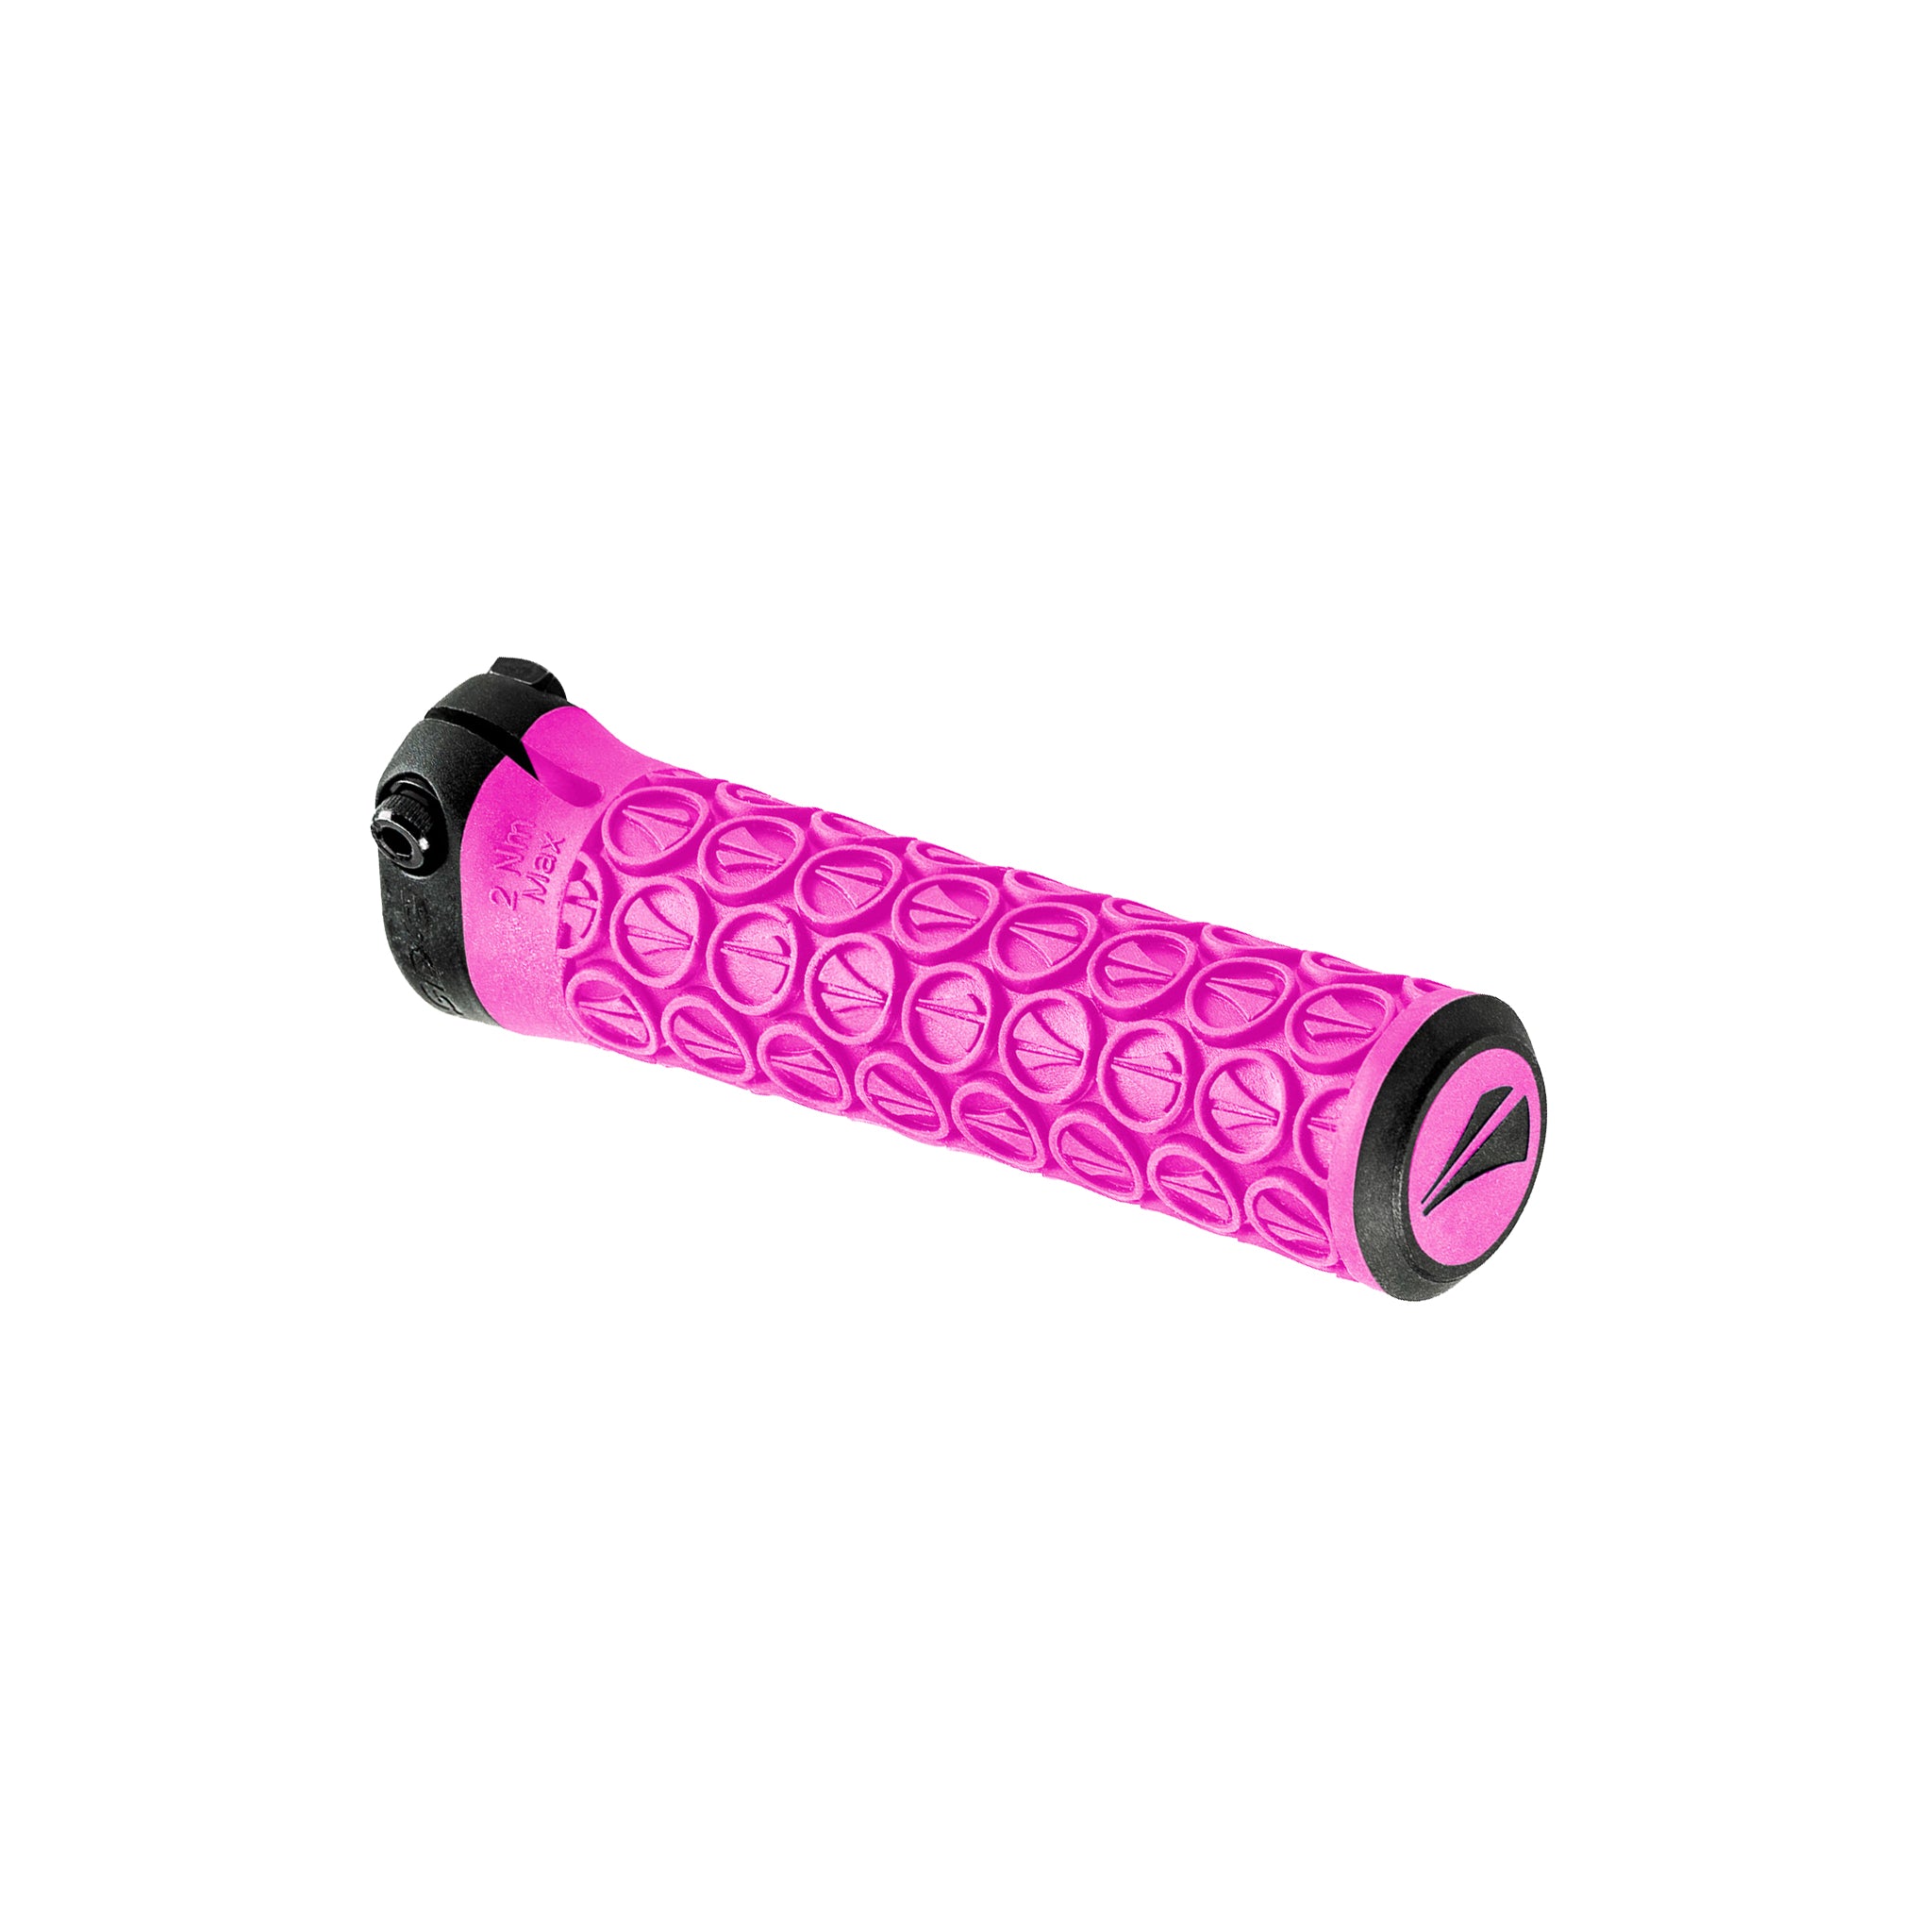 SDG Slater Jr Lock-On MTB Grips - Neon Pink/Blk